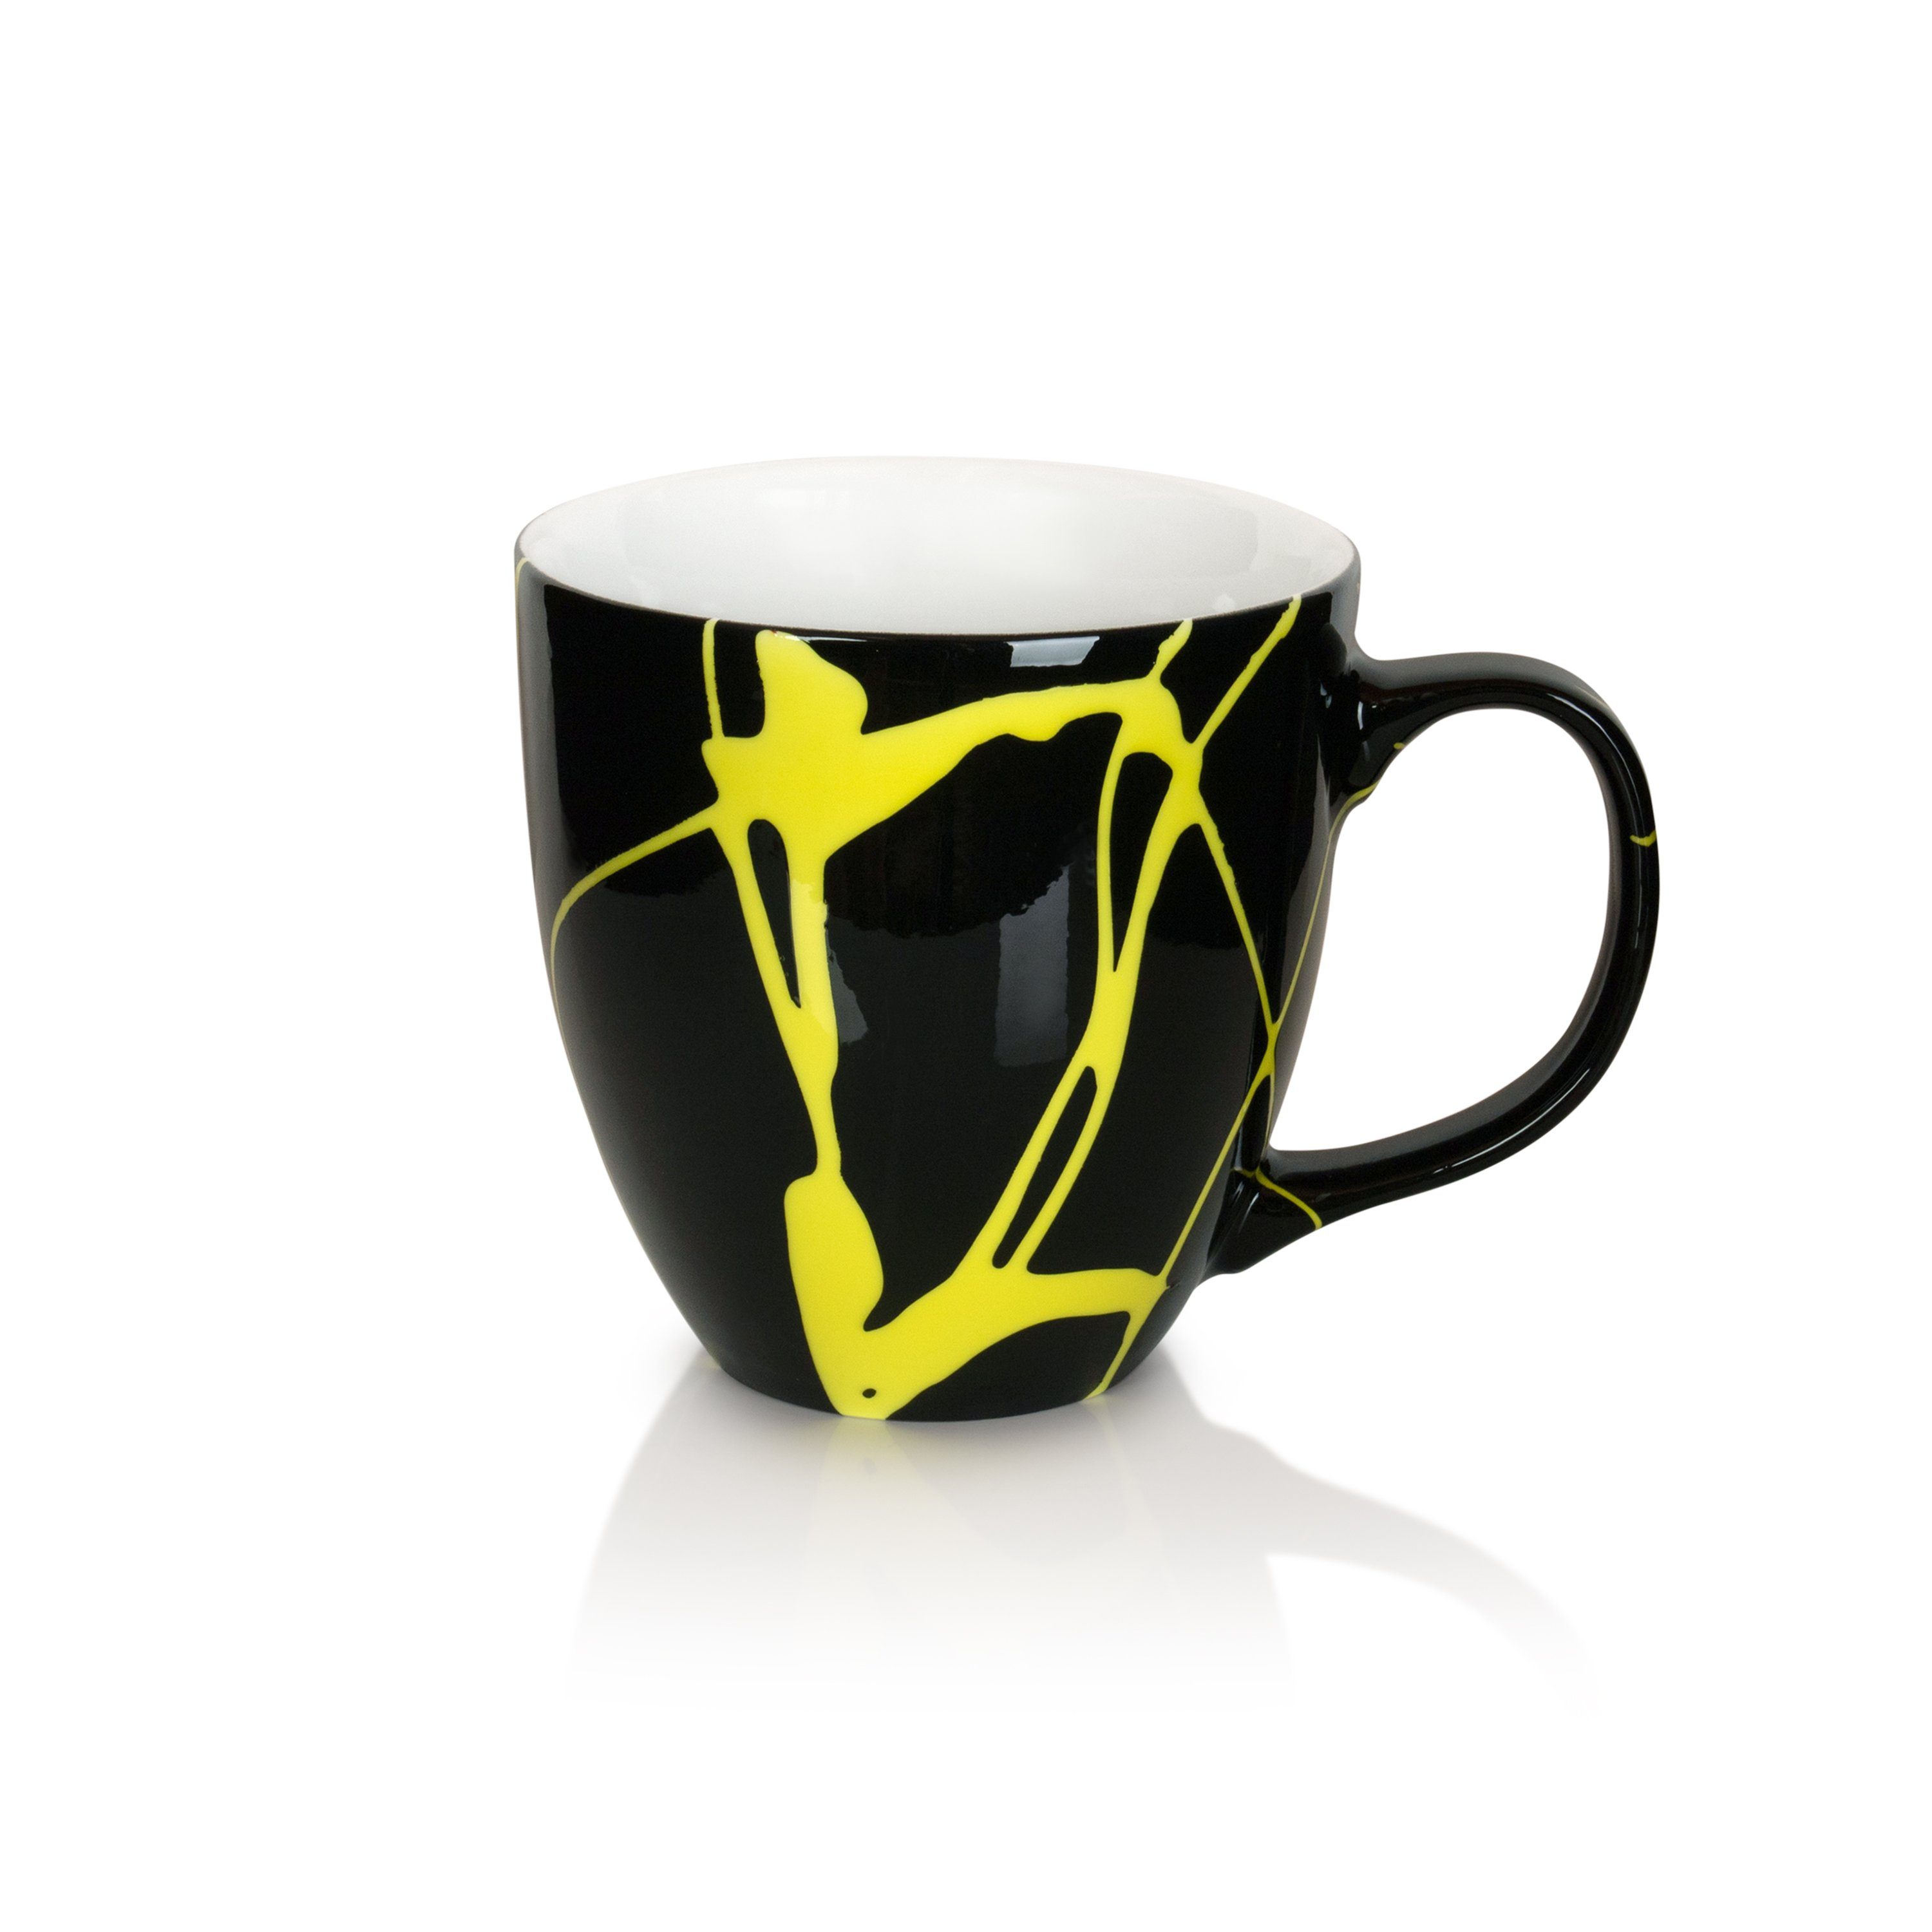 Mahlwerck Manufaktur Teeschale Jumbotasse, Porzellan, 100% klimaneutral Freaky Yellow | Teeschalen